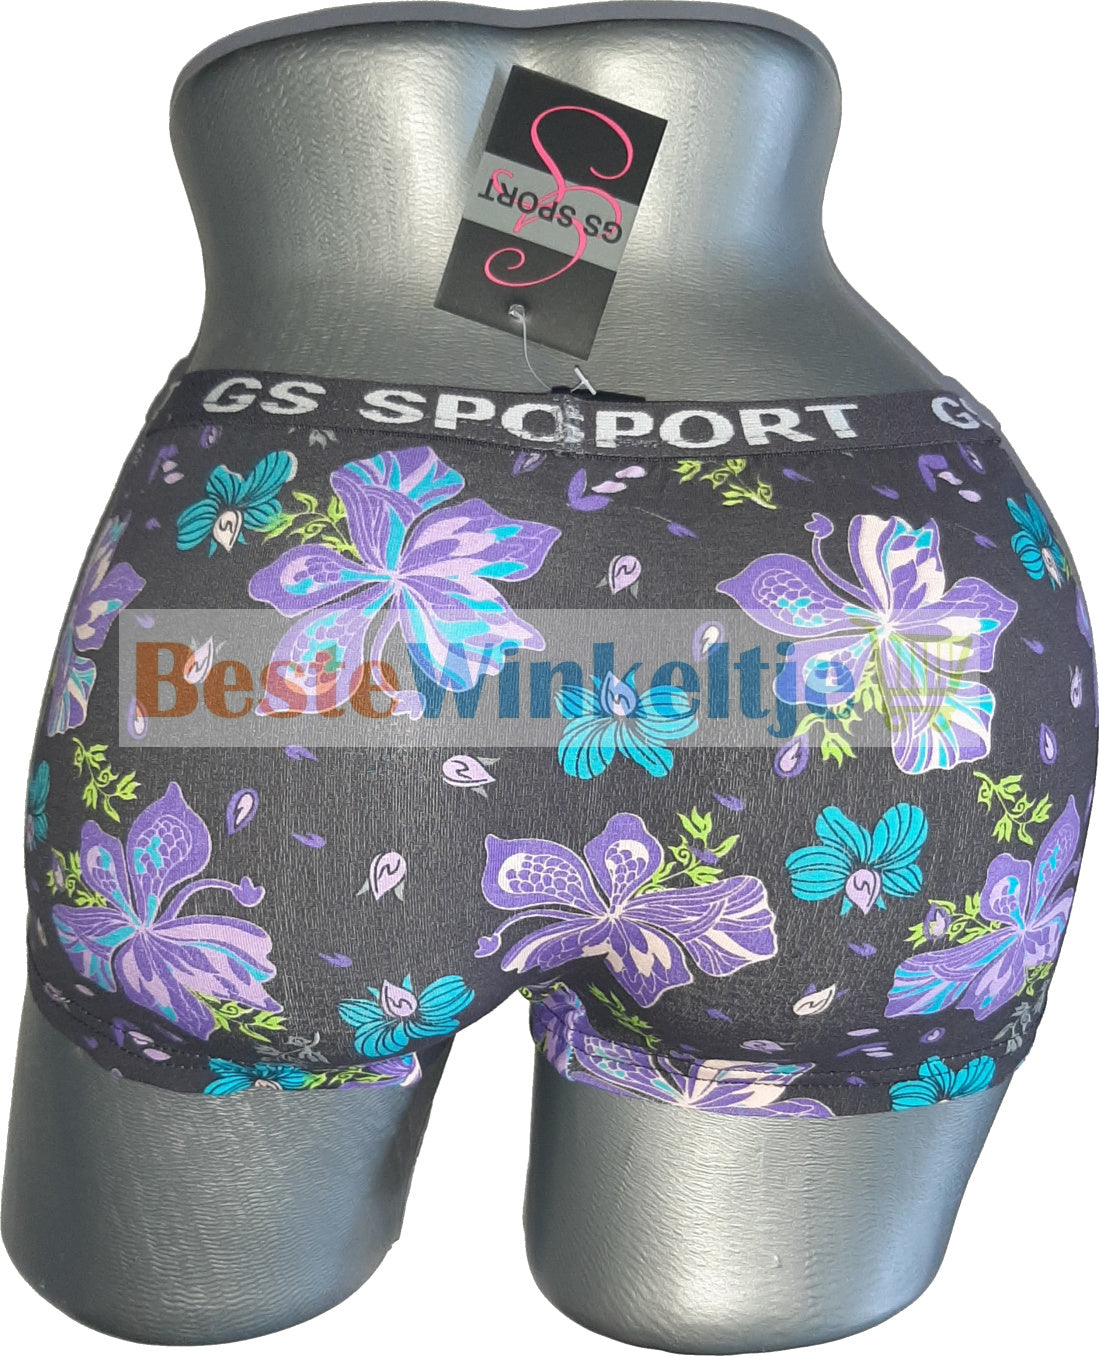 2 pack GS Sport Dames Print Zwart/Paars - boxershort